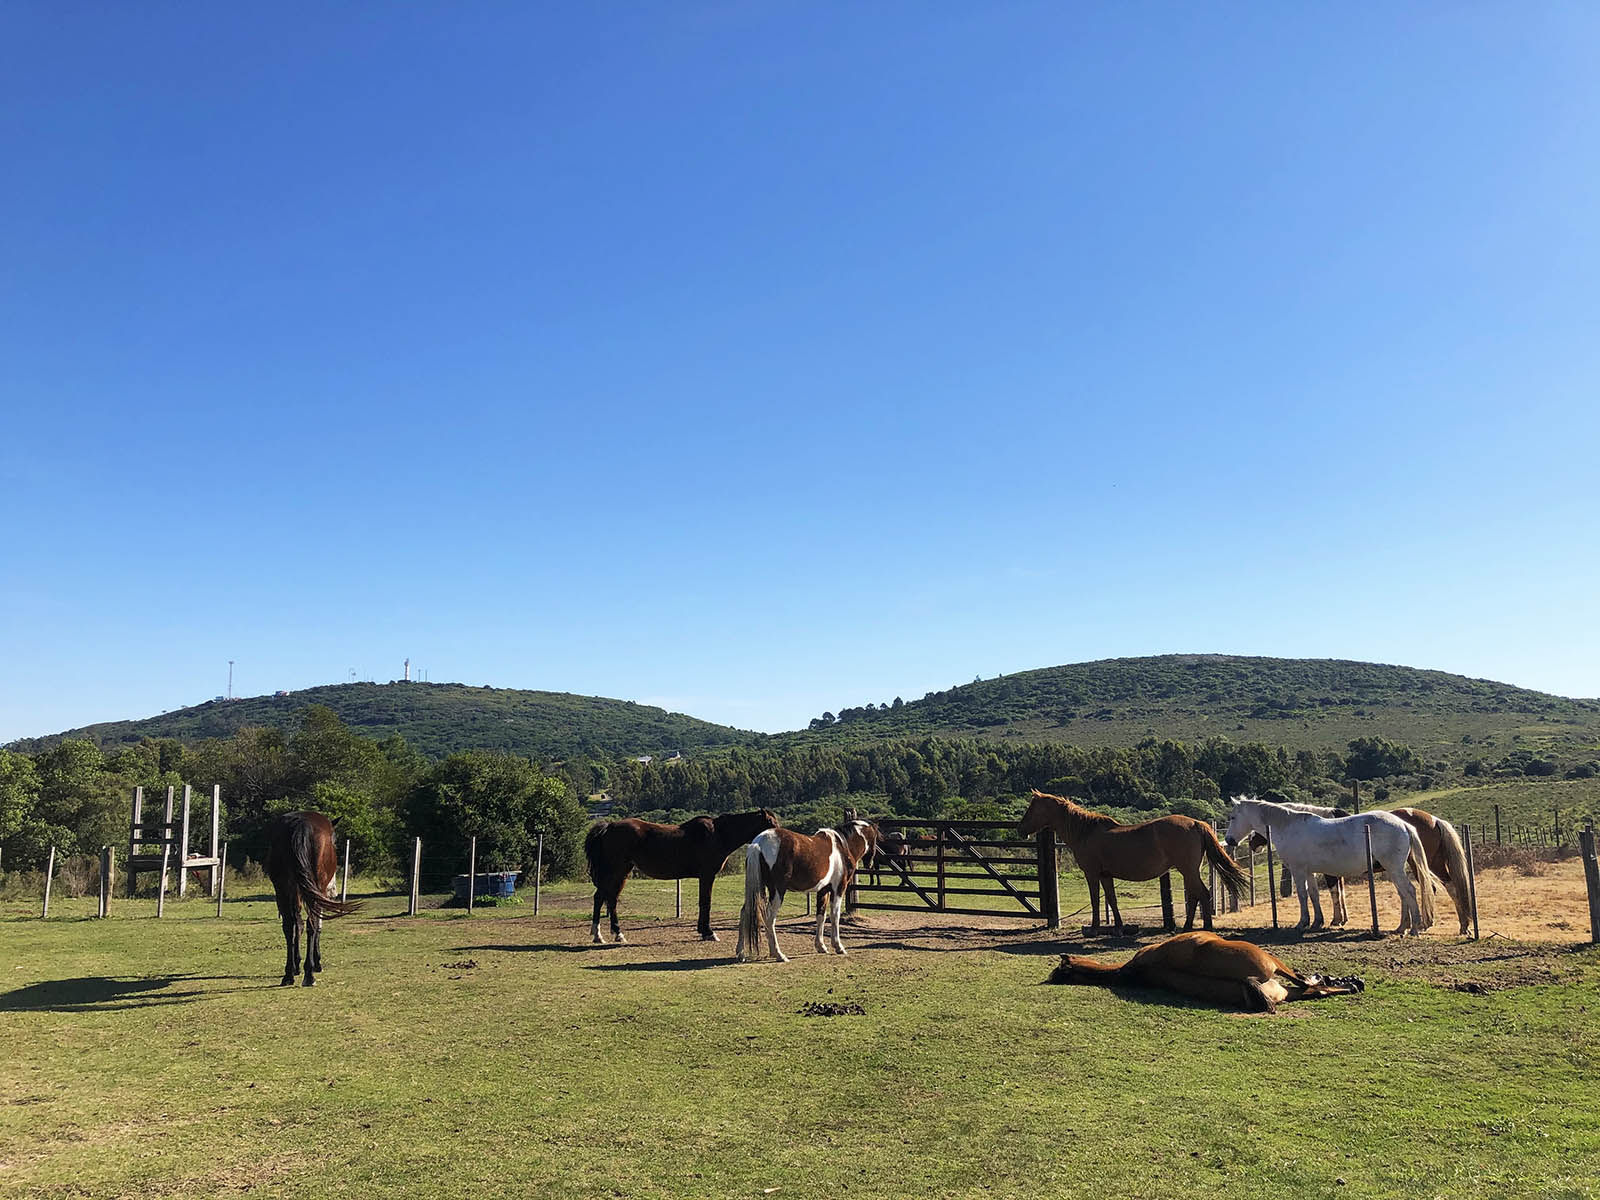 Horses and the surrounding hills of Piriapolis. Credit: Carolina Valenzuela